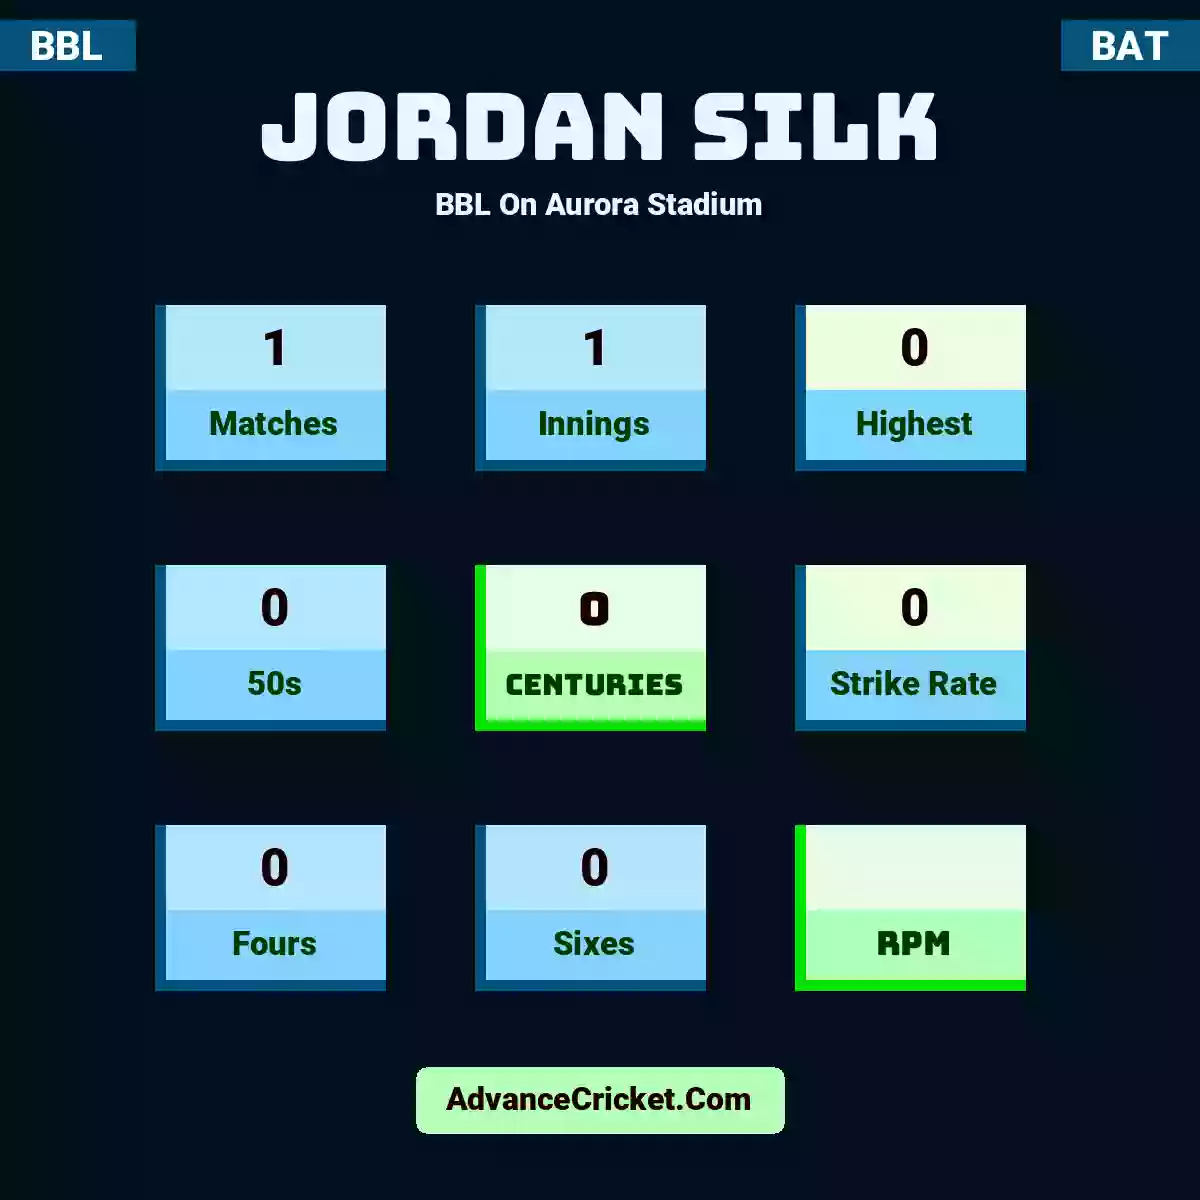 Jordan Silk BBL  On Aurora Stadium, Jordan Silk played 1 matches, scored 0 runs as highest, 0 half-centuries, and 0 centuries, with a strike rate of 0. J.Silk hit 0 fours and 0 sixes.